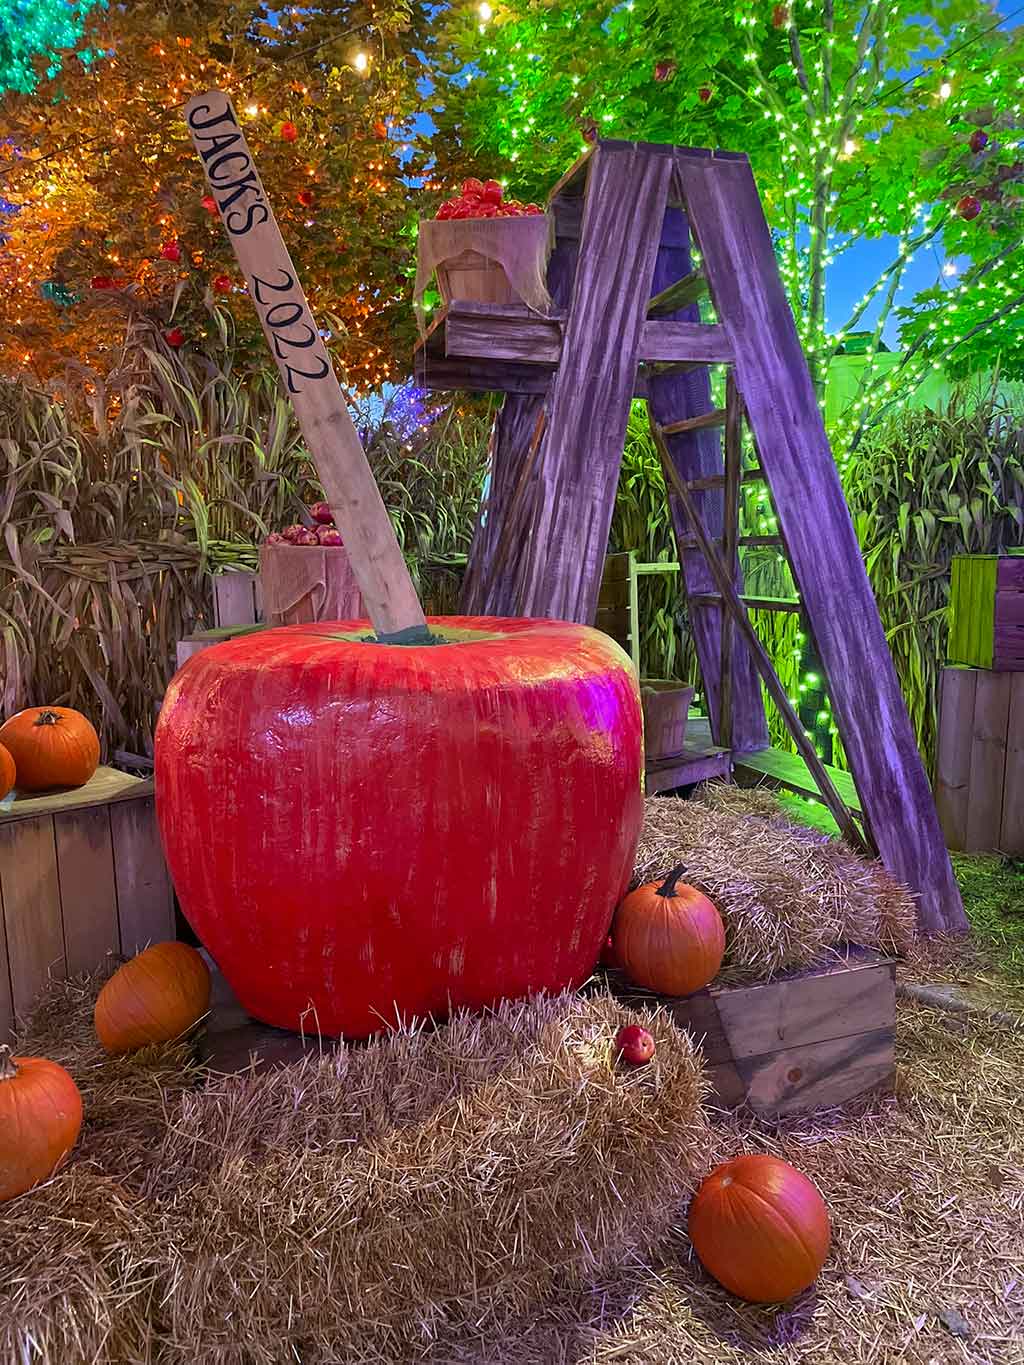 drive-swim-fly-chicago-illinois-jacks-pumpkin-pop-up-pumpkin-patch-selfie-red-candy-apple